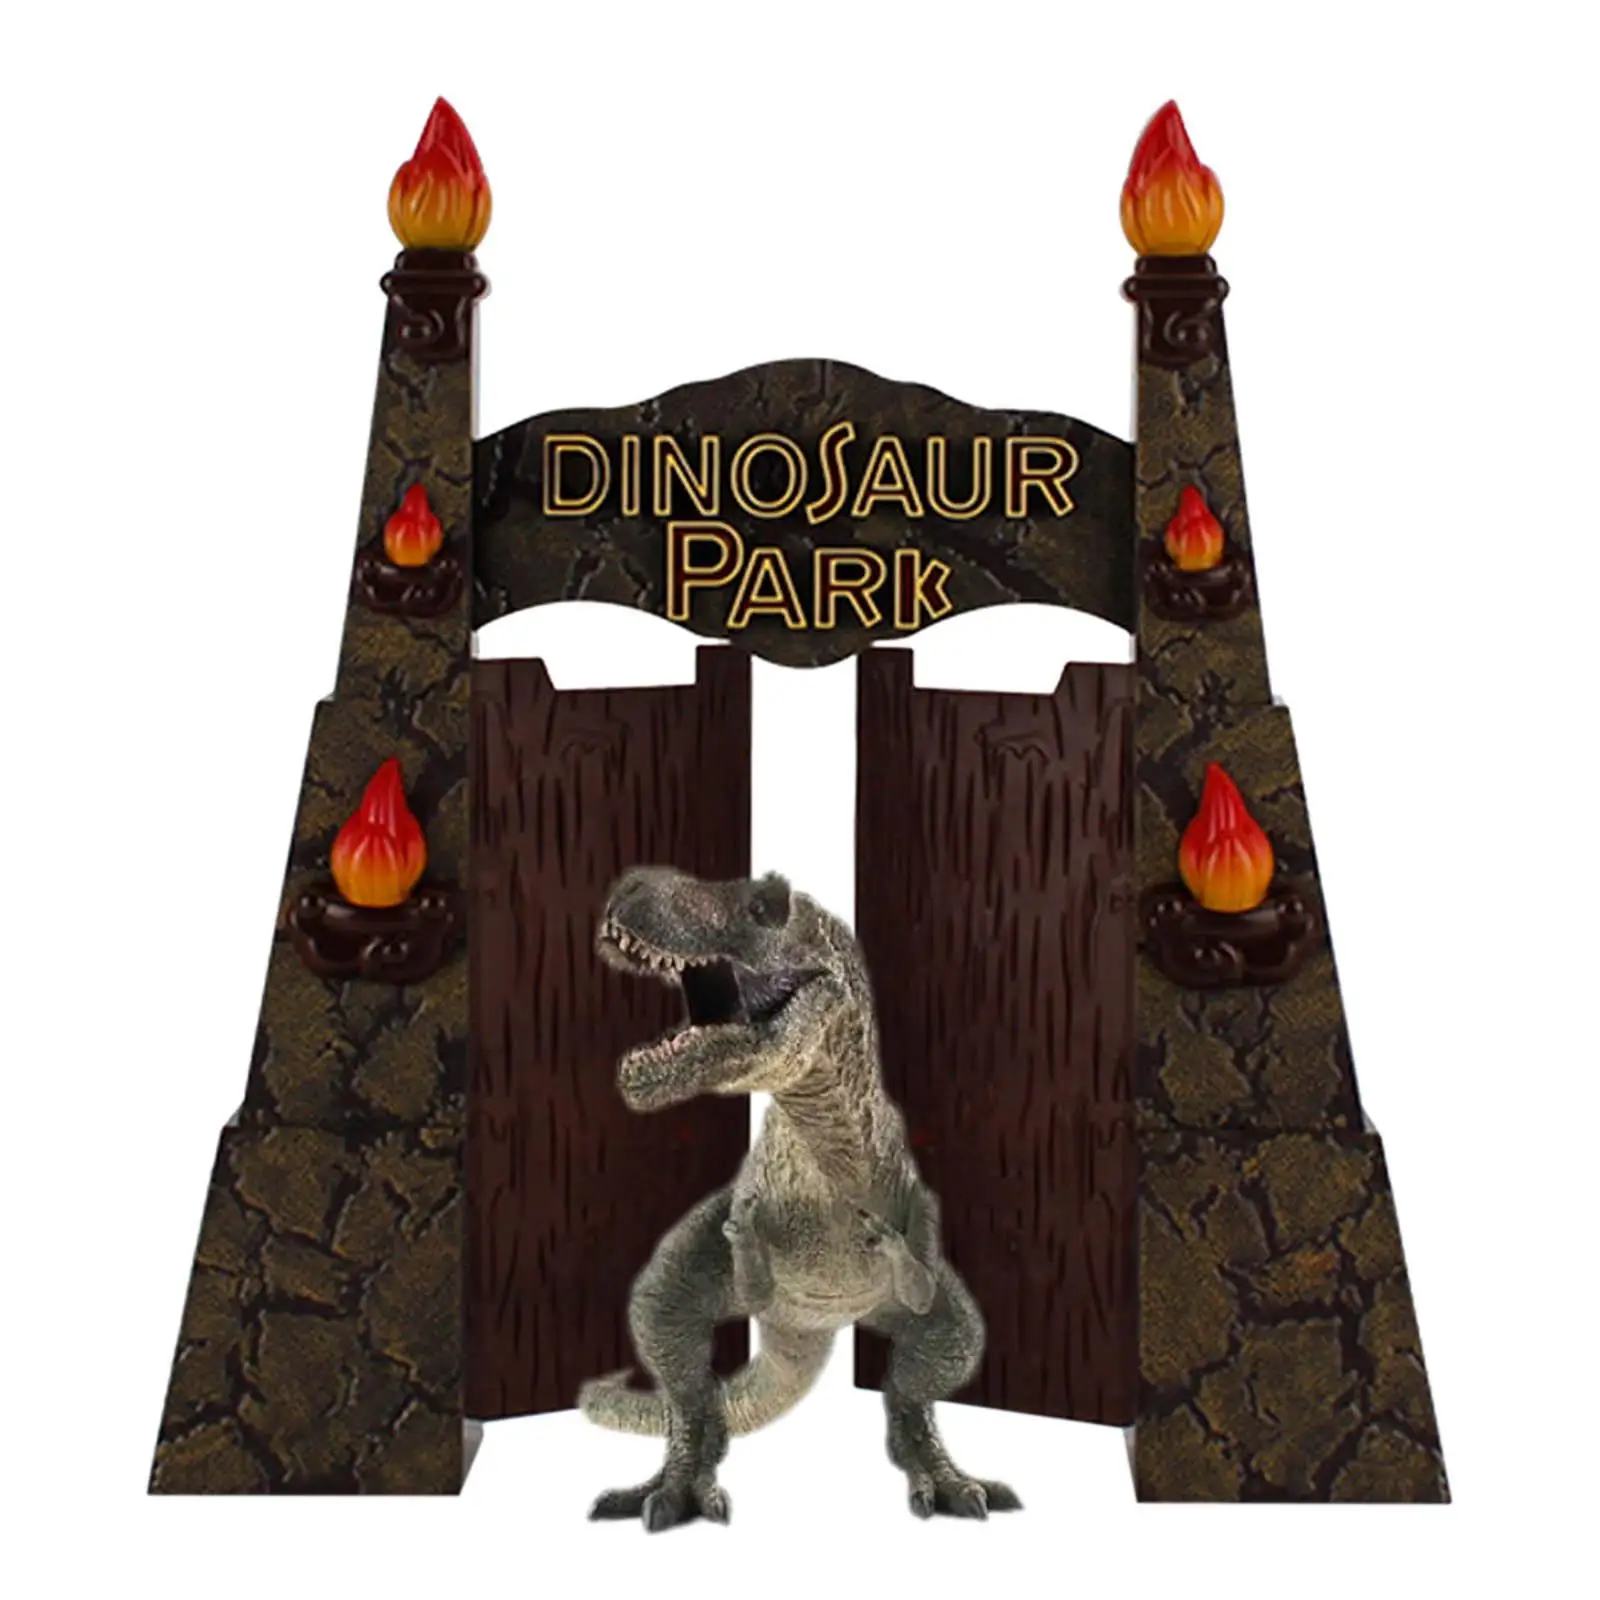 Dinosaur Park Fittings Sculpture Ornament Durable Gift Backdrop Model DIY Gate Frame for Kids Birthday Adventure Party